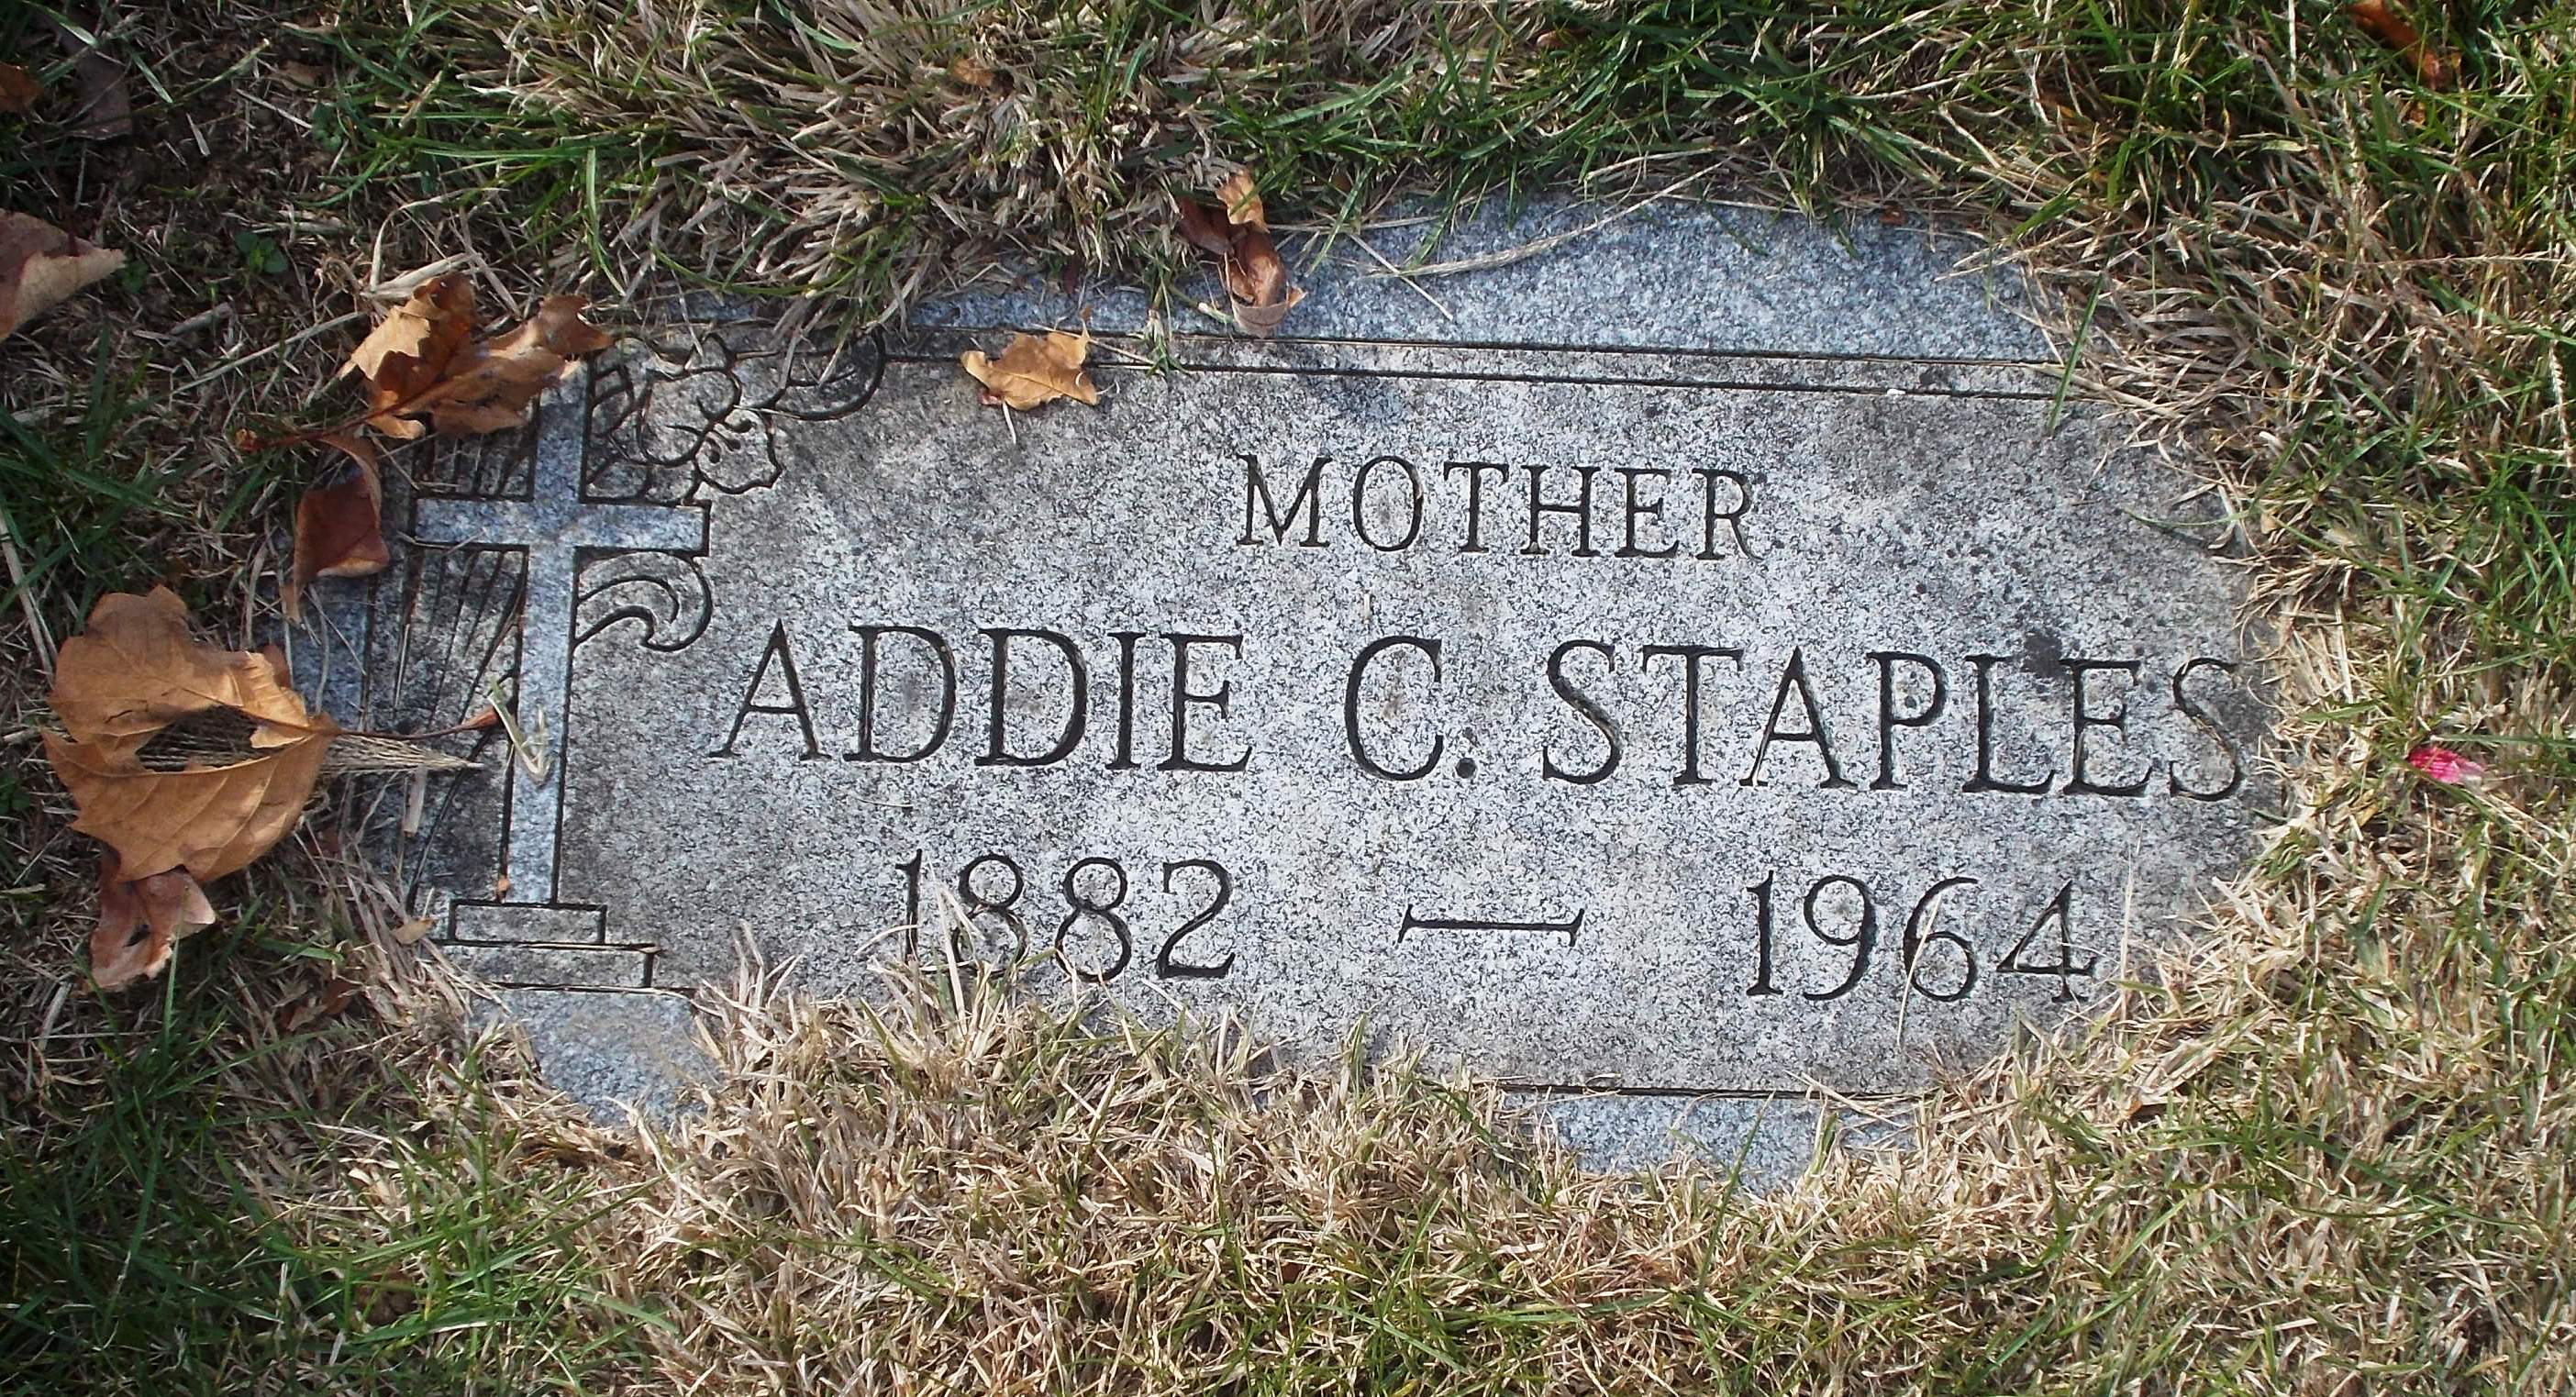 Addie C Staples